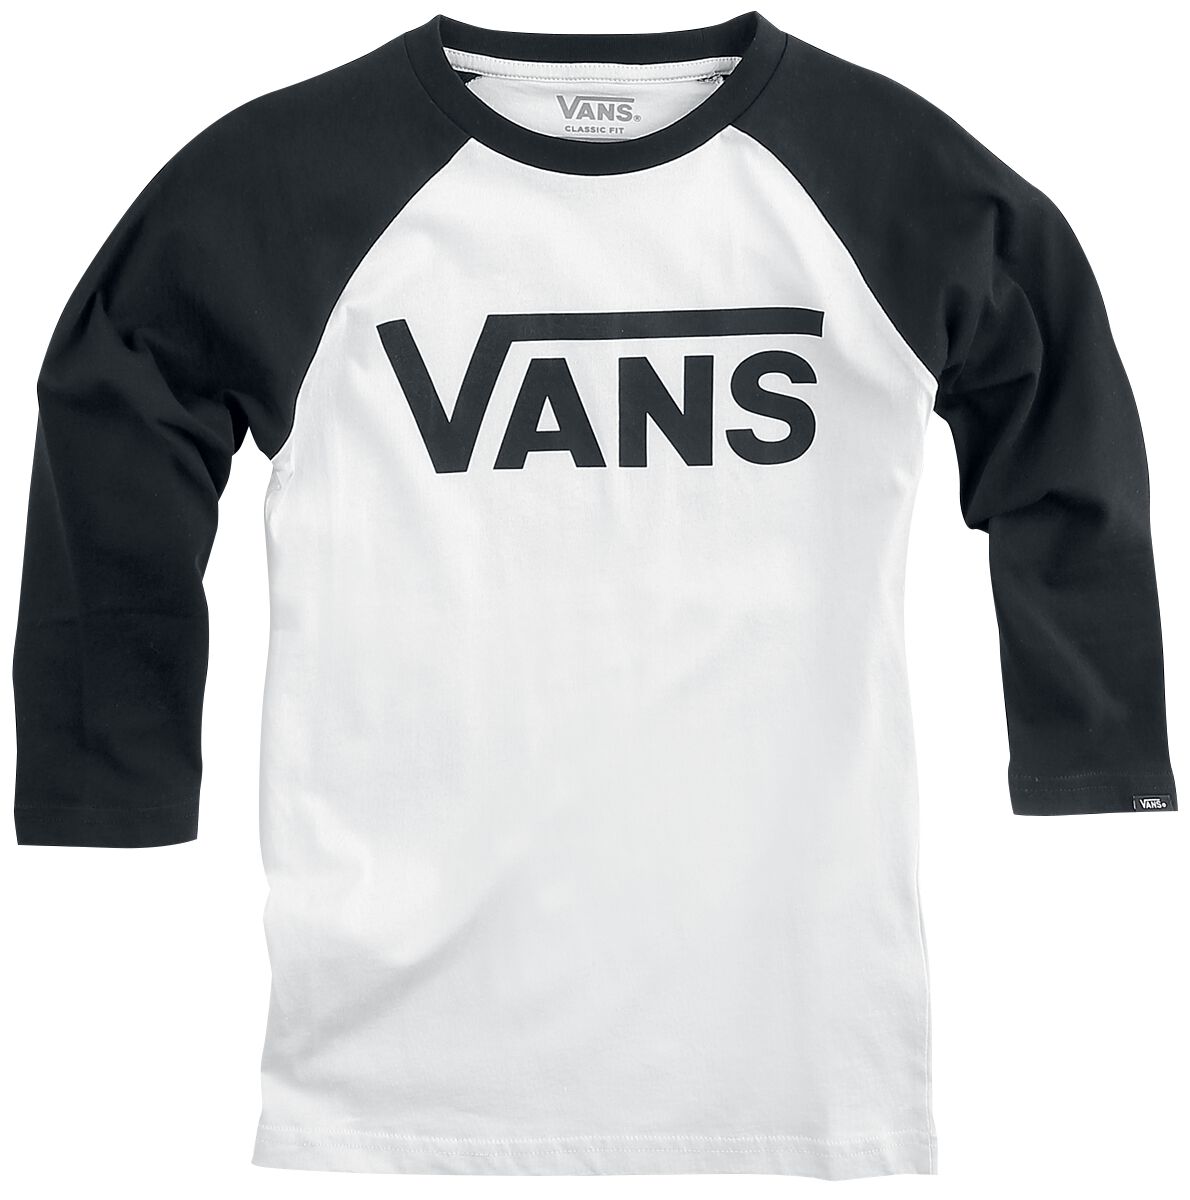 Vans Kids BY VANS Classic Raglan Langarmshirt schwarz weiß in S